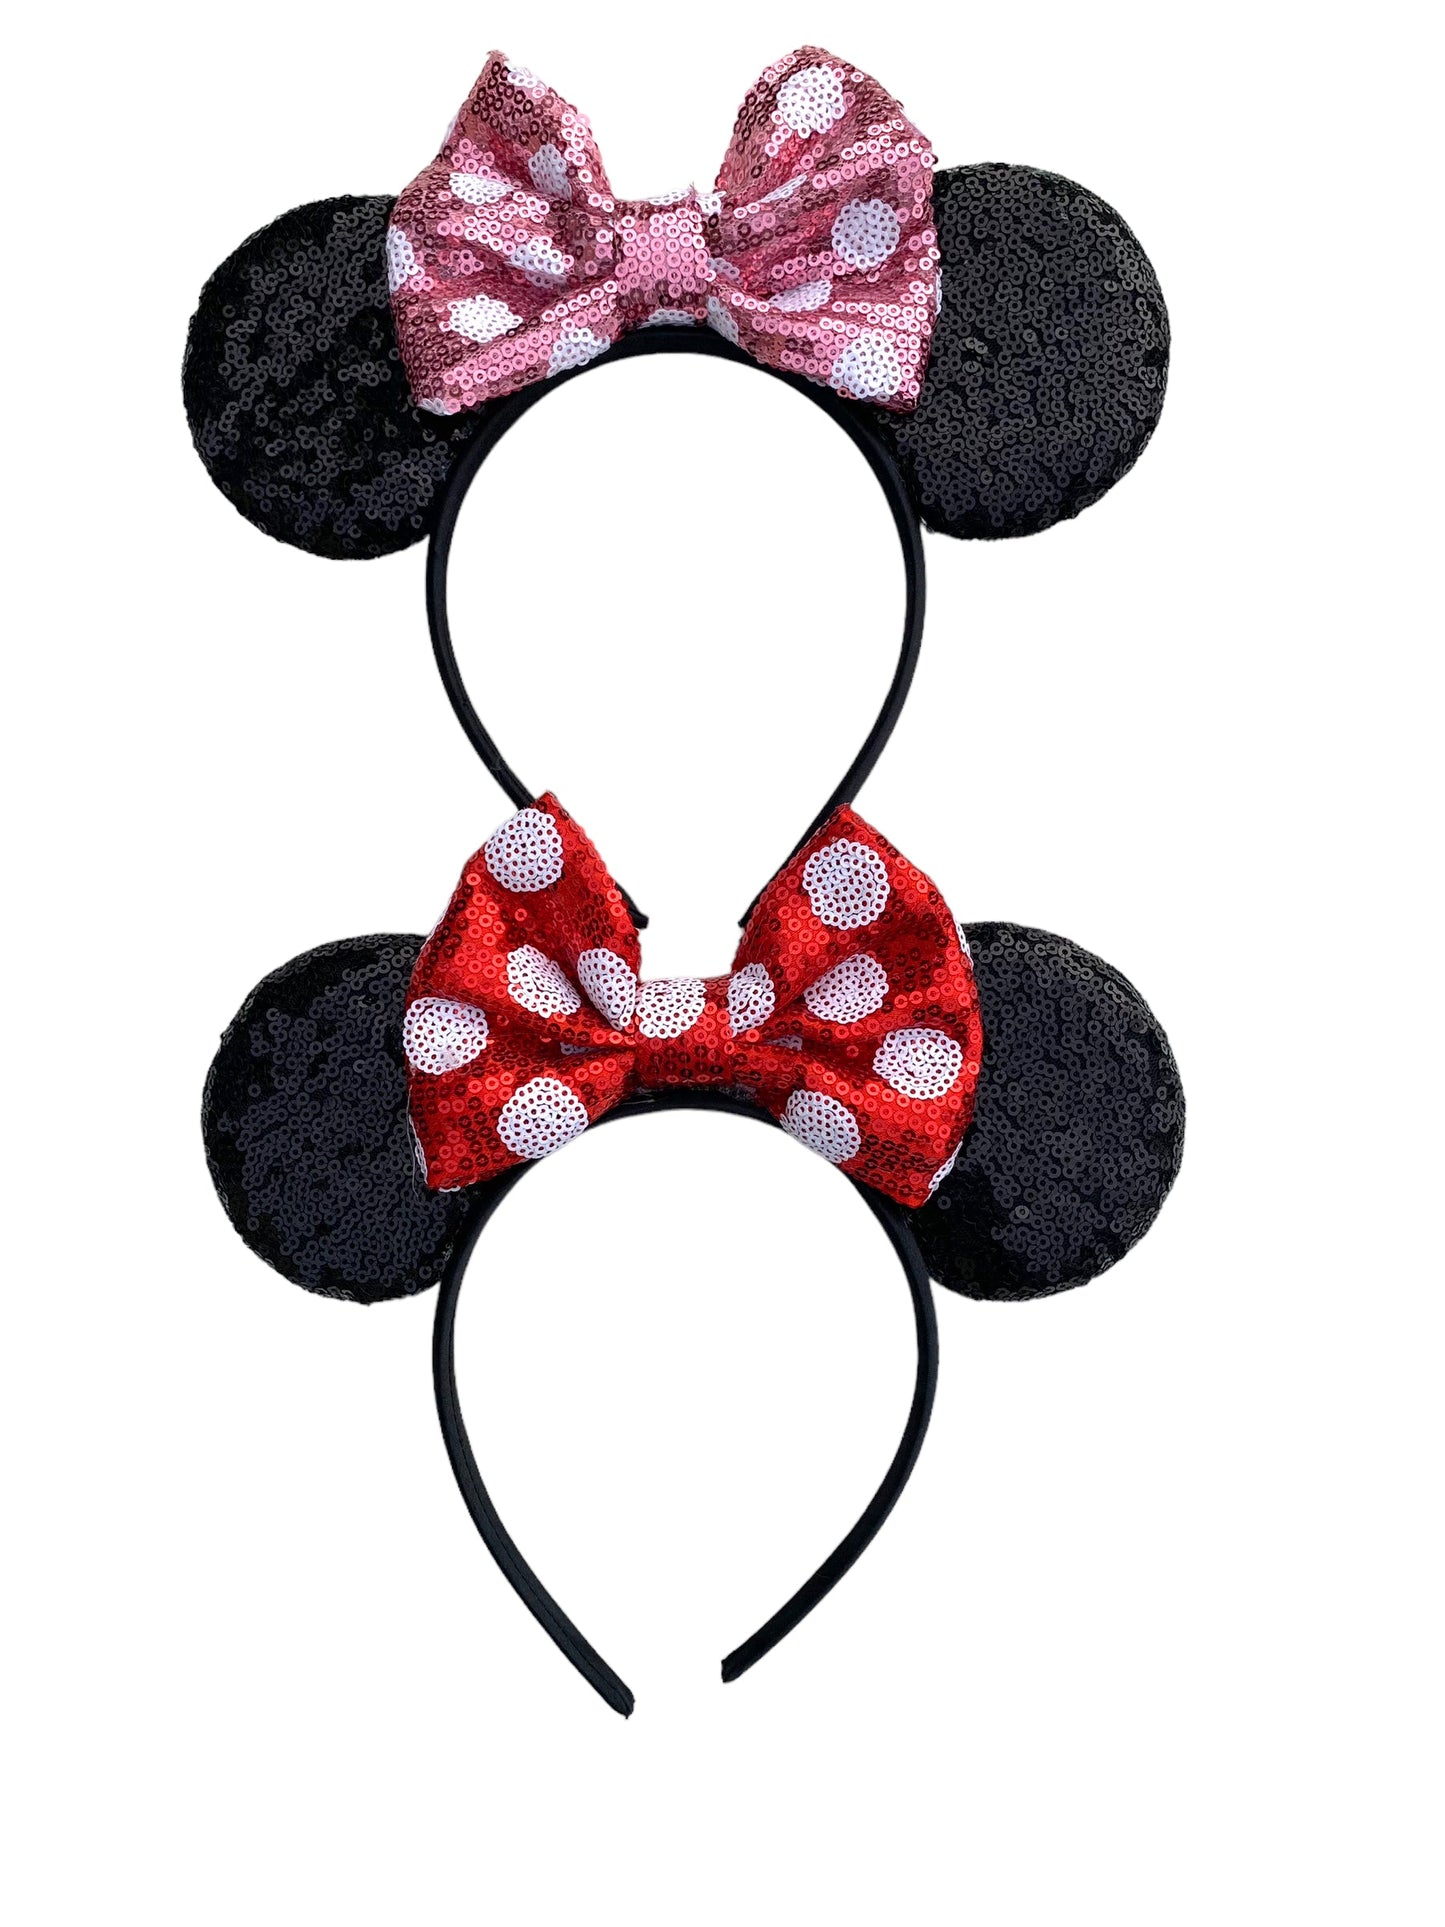 Chunky Red Polka Dot Bow Mouse Ear Headband